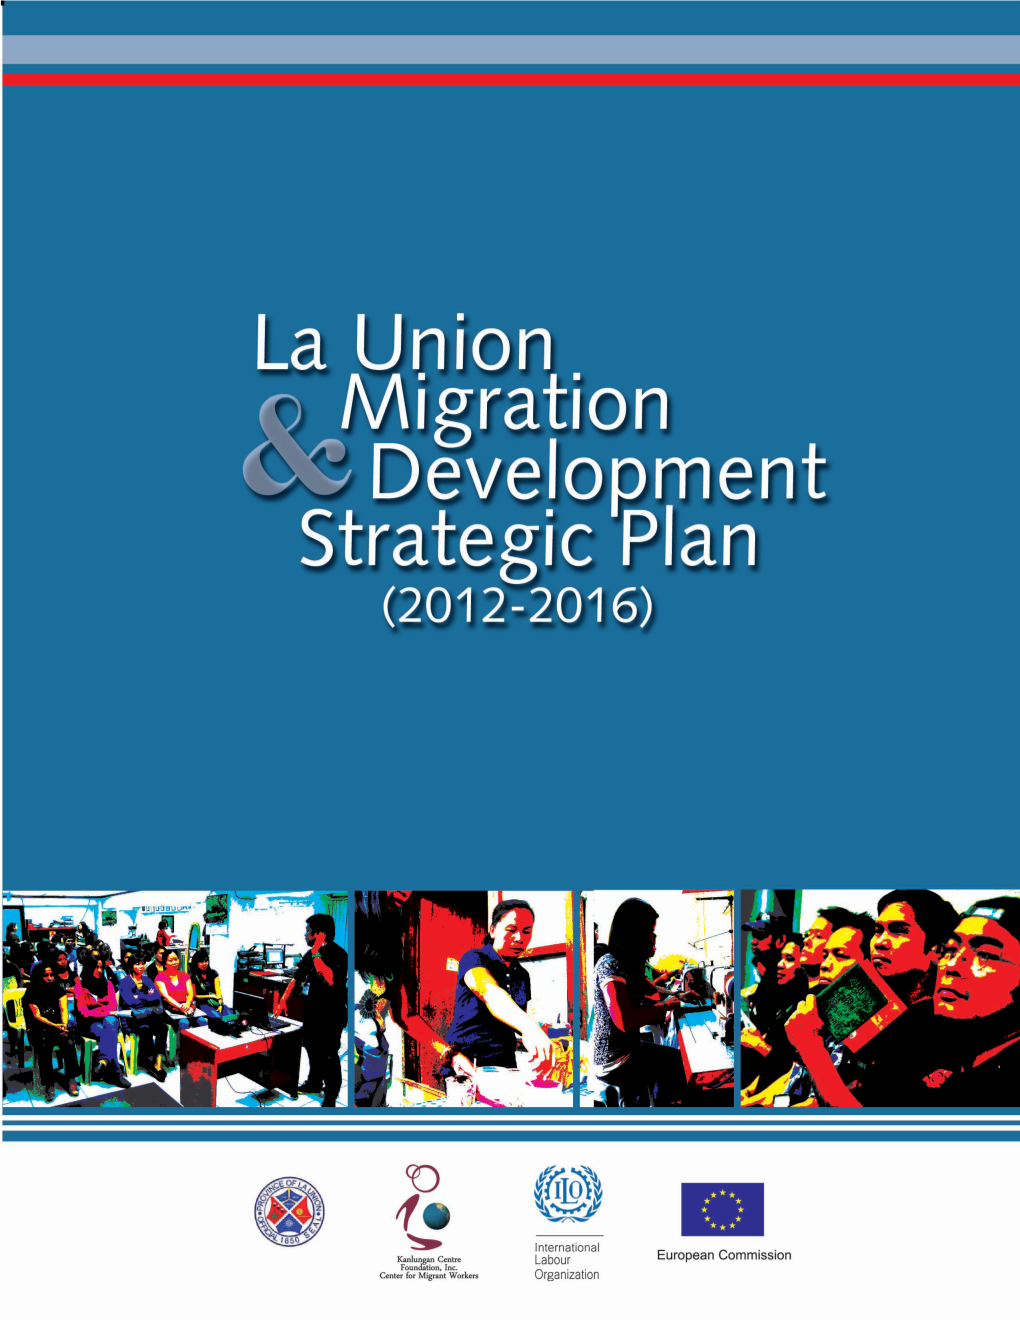 La Union Migration and Development Strategic Plan (2012-2016)